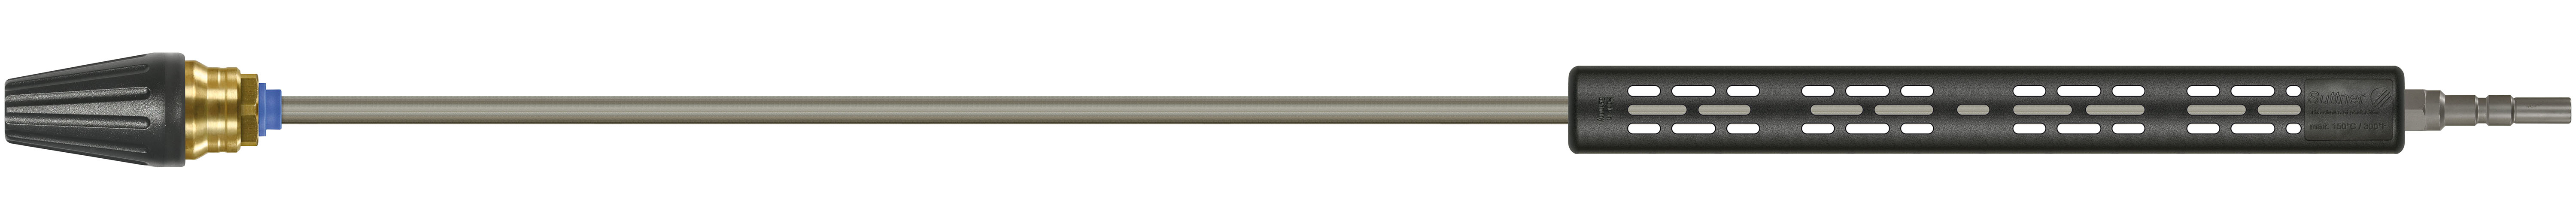 Rotabuse céramique avec lance 1000mm, 200-400 bar, Calibre 050